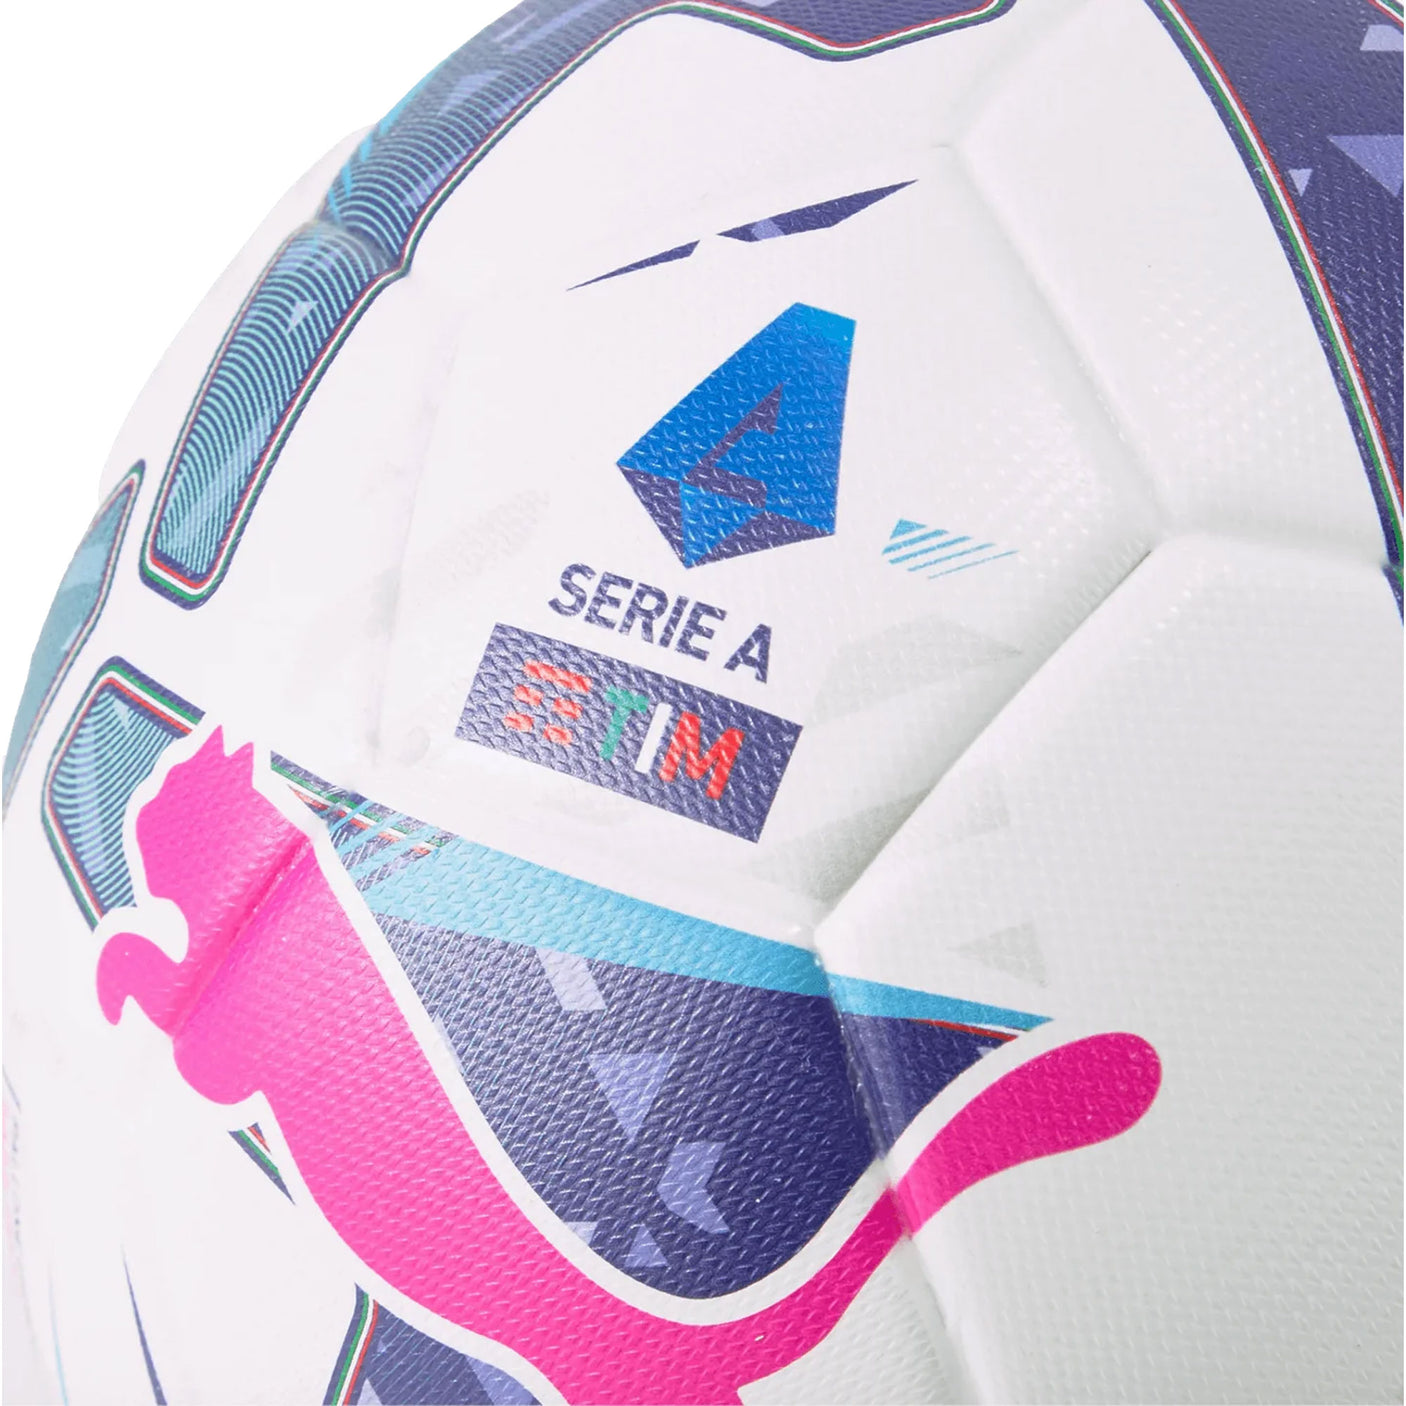 PUMA Orbita Serie A Fifa Quality Training Ball Puma White/Sunset Glow Side